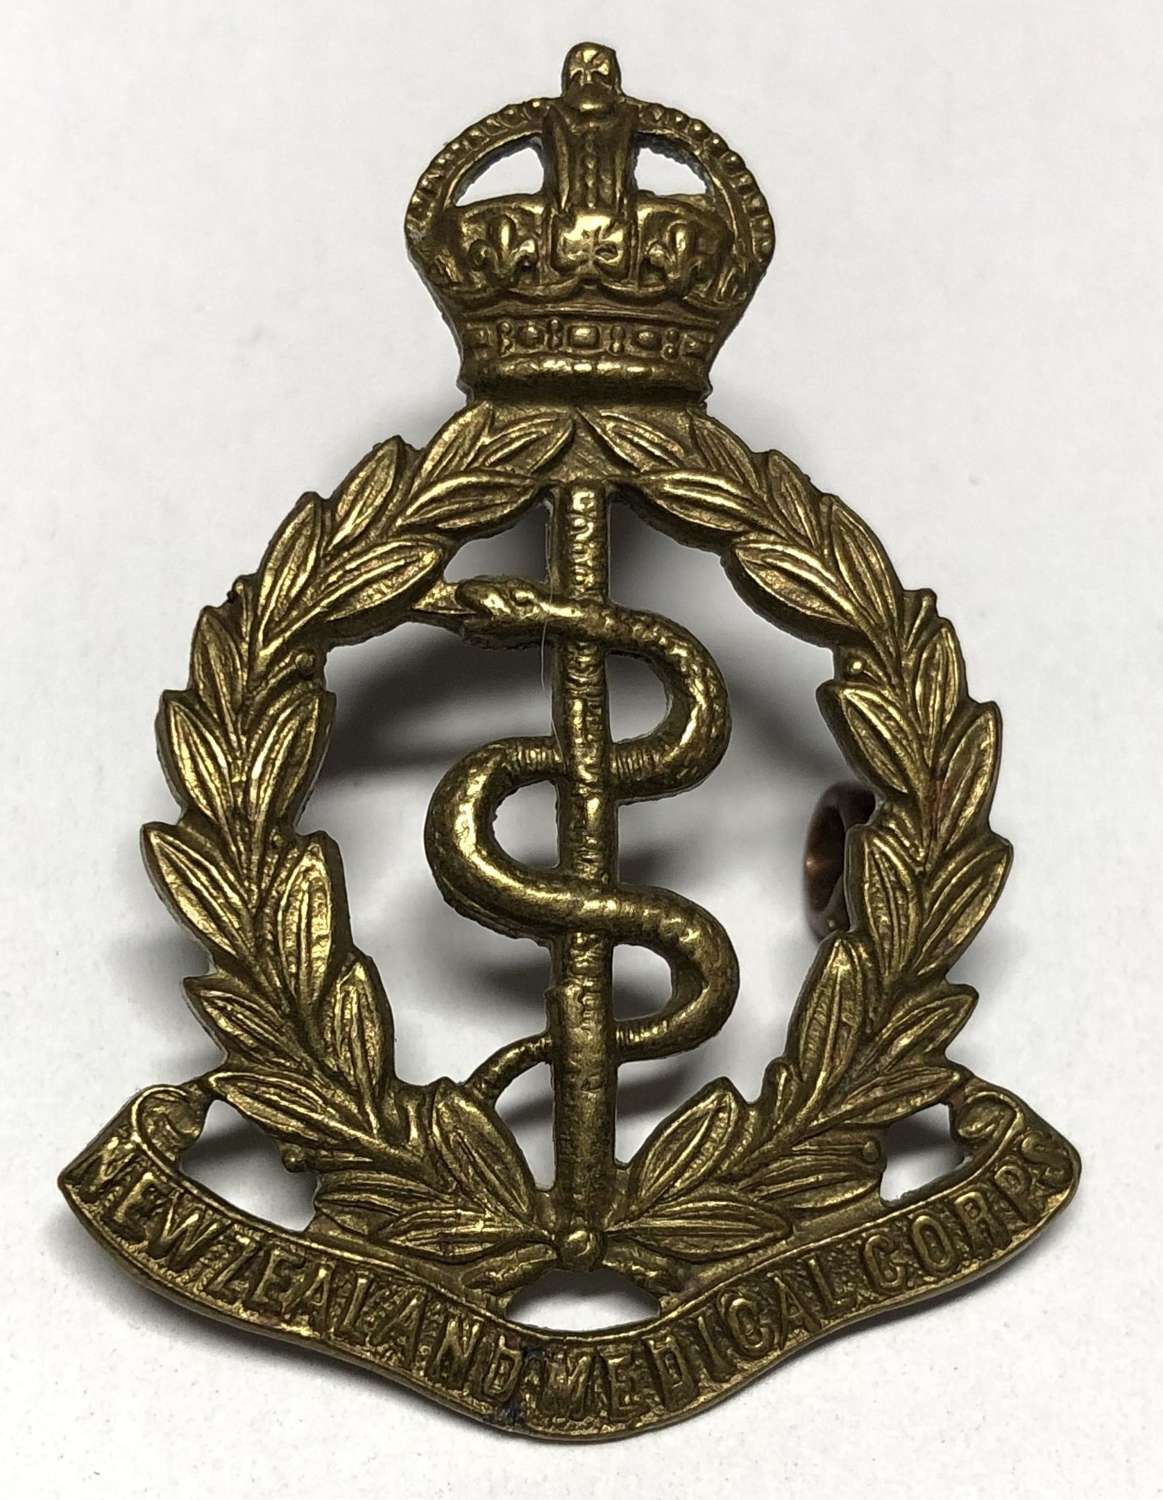 New Zealand Medical Corps cap badge